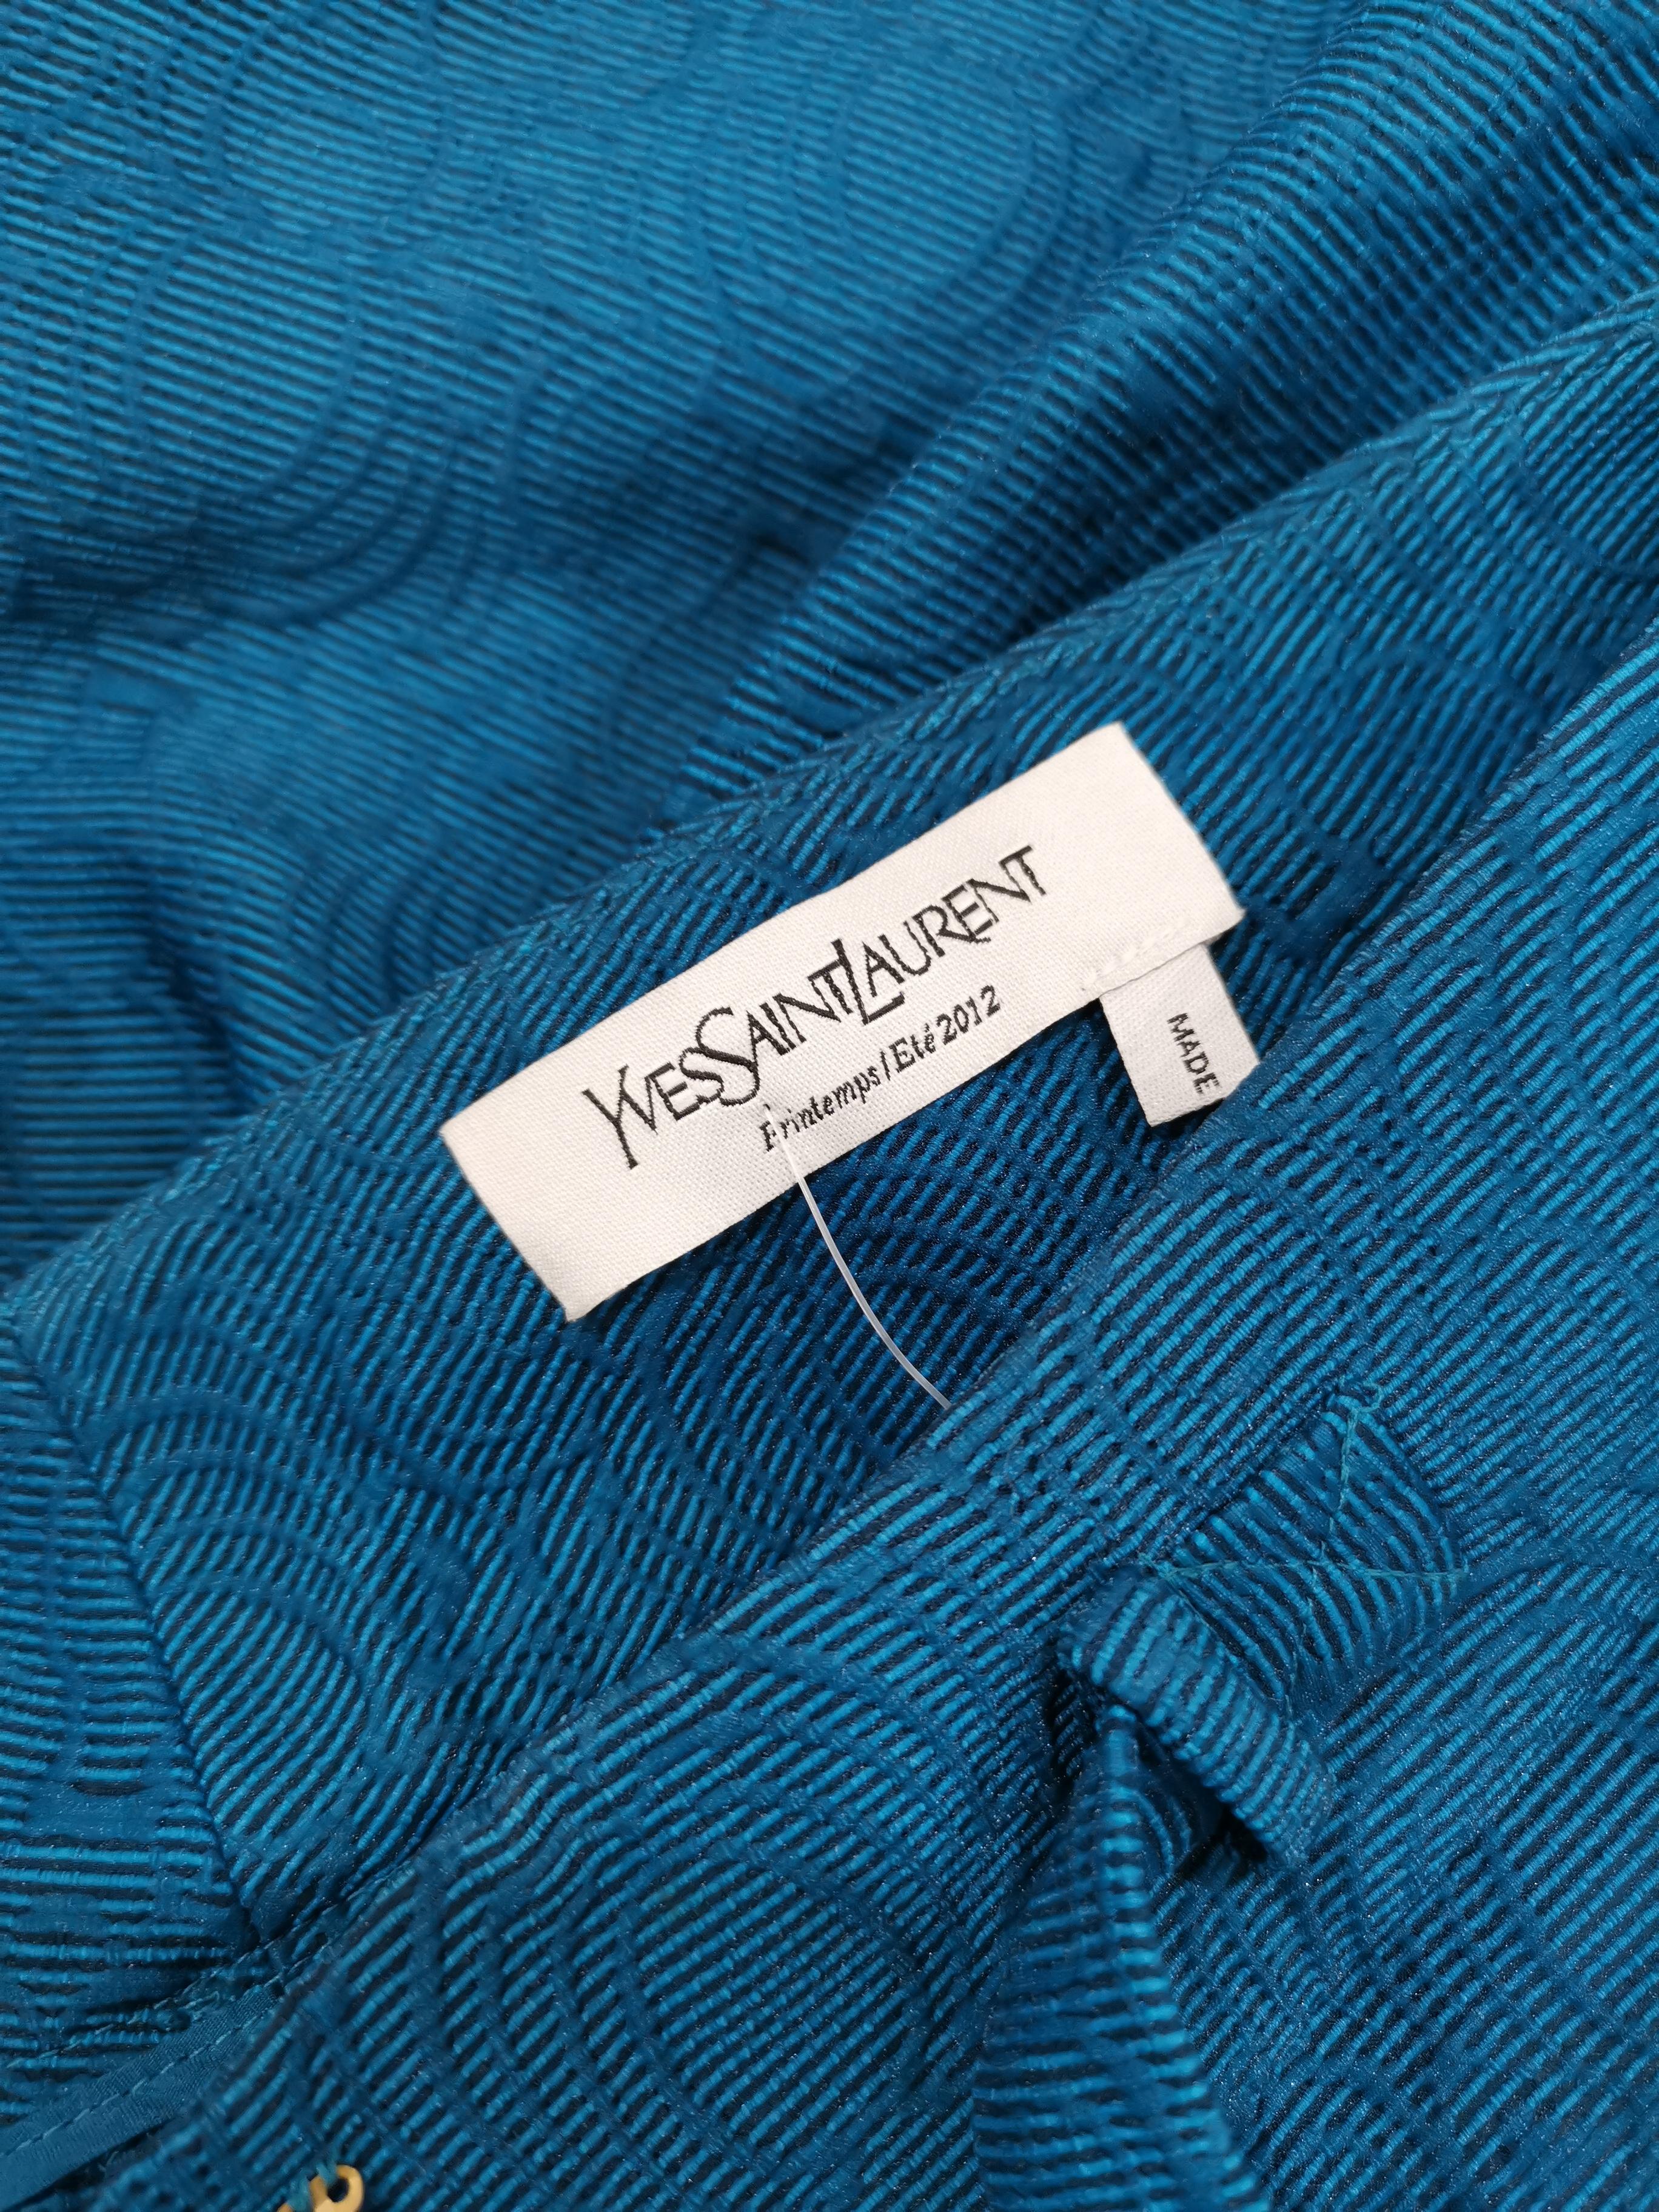 2012 Yves Saint Laurent blu pants NWOT For Sale 6